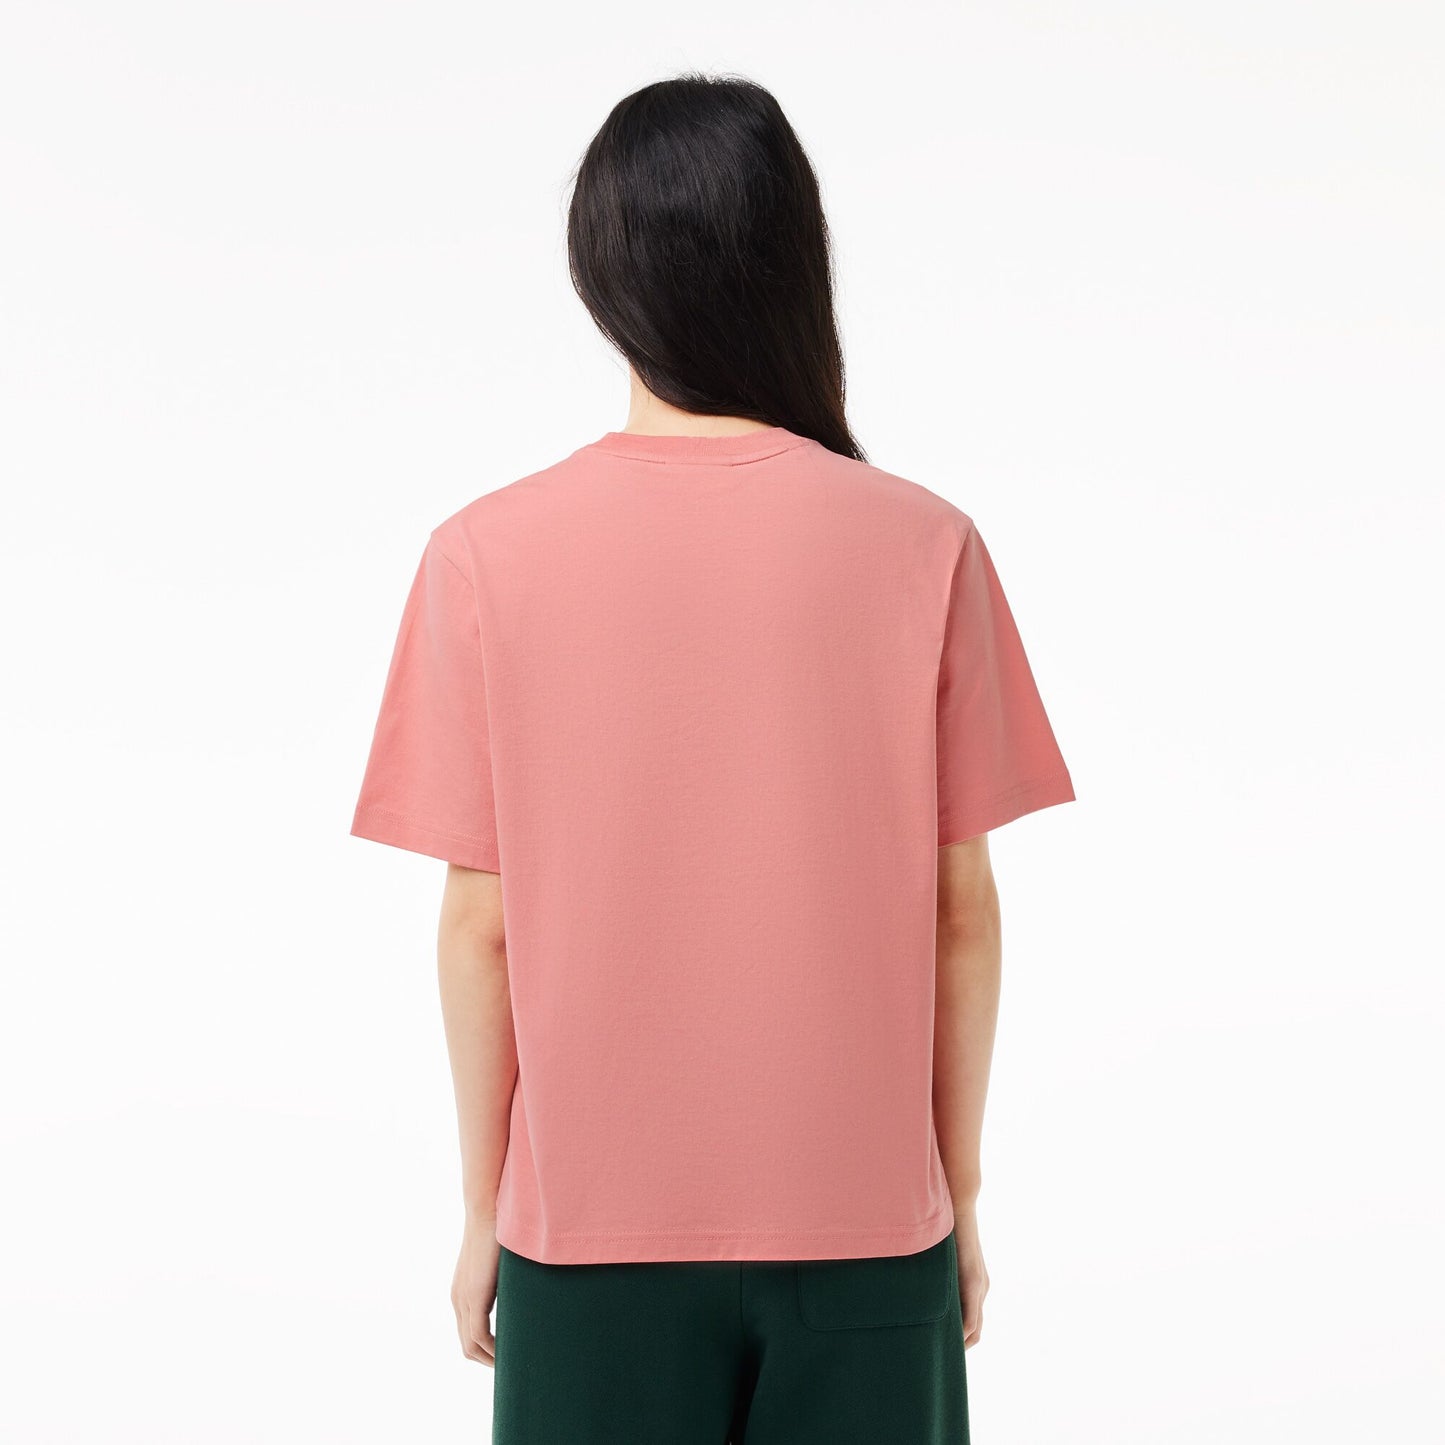 Relaxed Fit Lightweight Cotton Pima Jersey T-shirt - TF7215